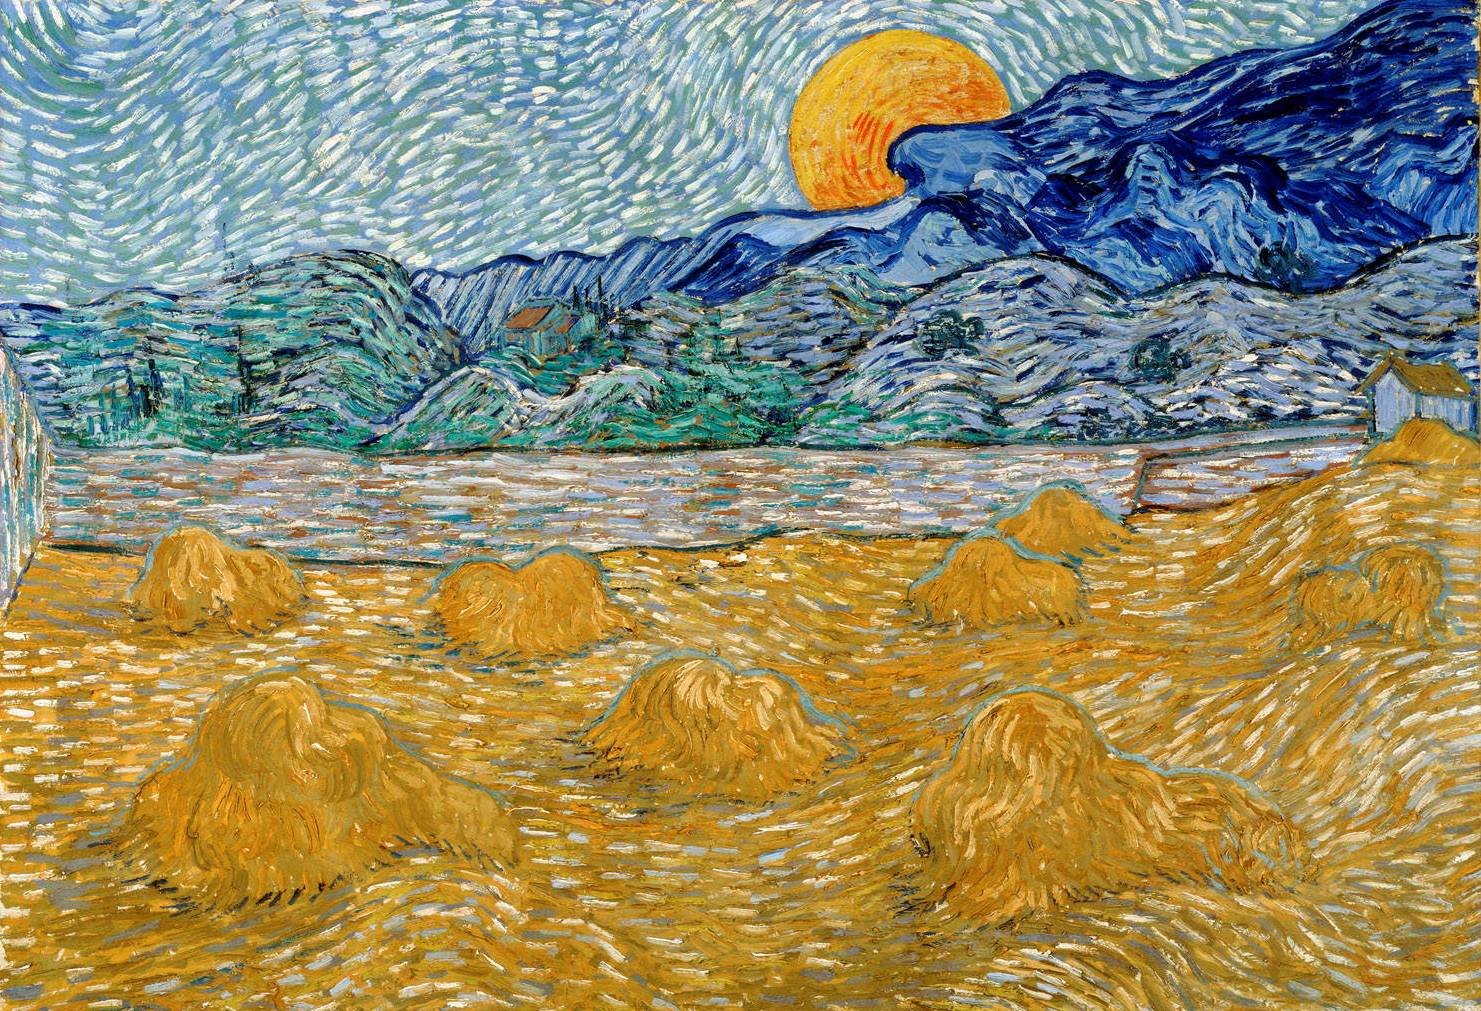 Vincent+Van+Gogh-1853-1890 (793).jpg